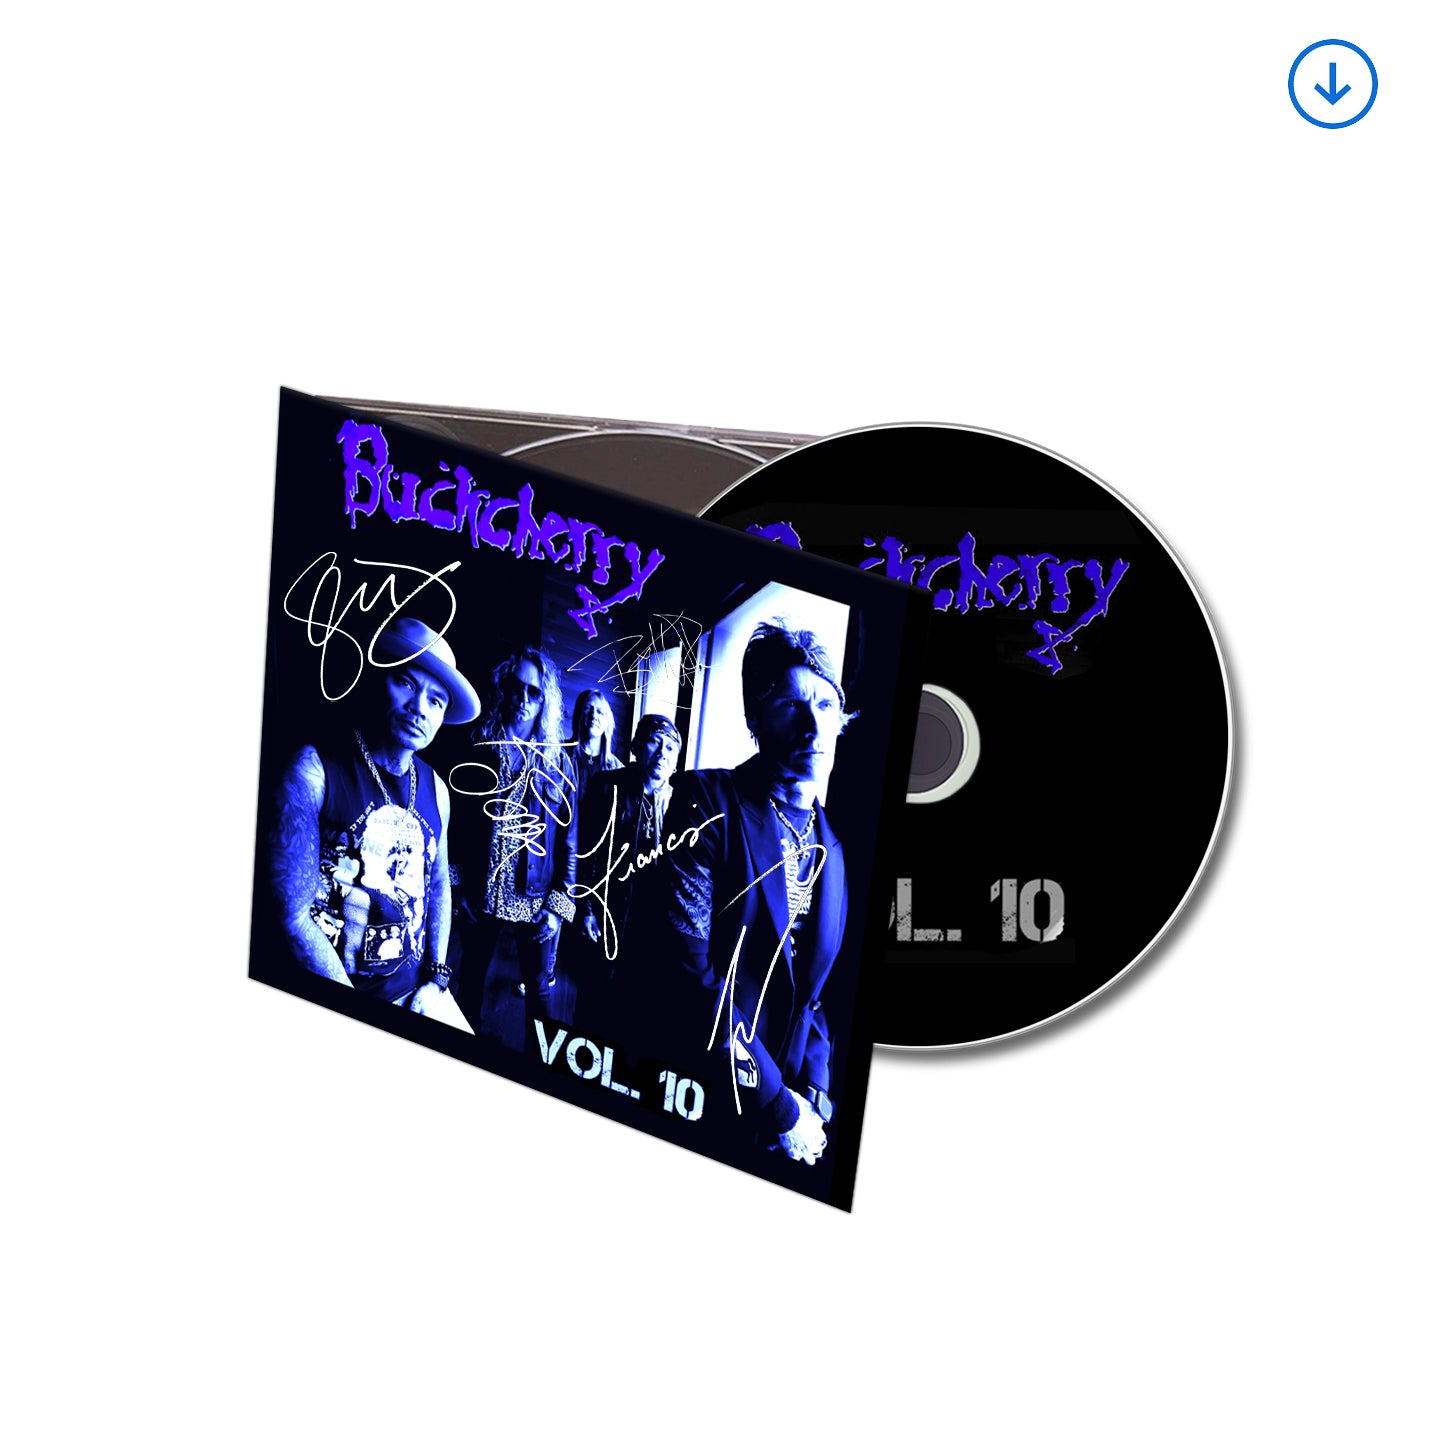 Buckcherry "Vol. 10" Signed Digipak CD w/ Alternate Cover